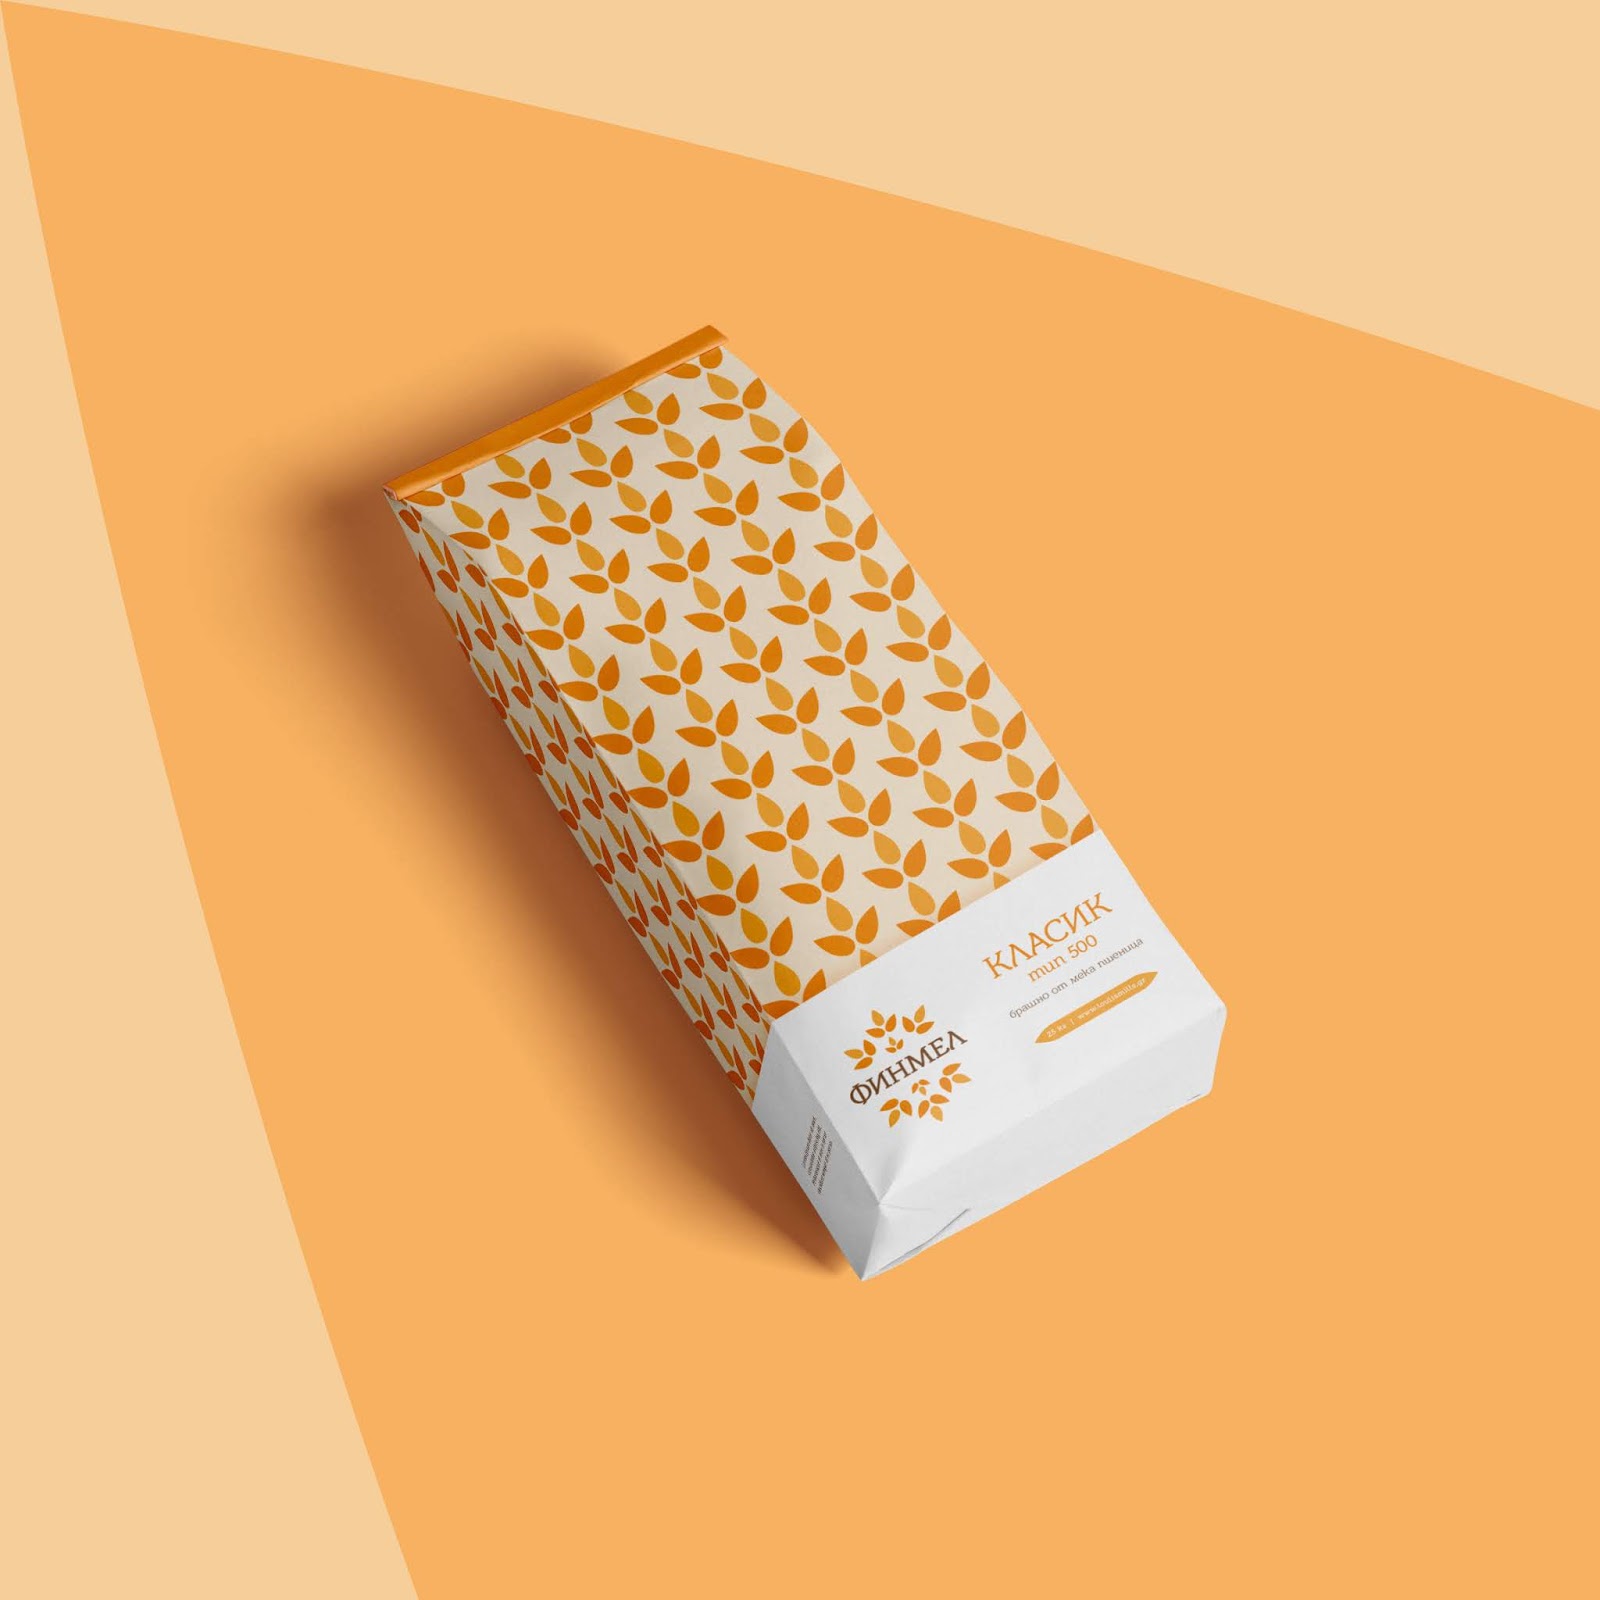 Finmel面粉概念包装设计